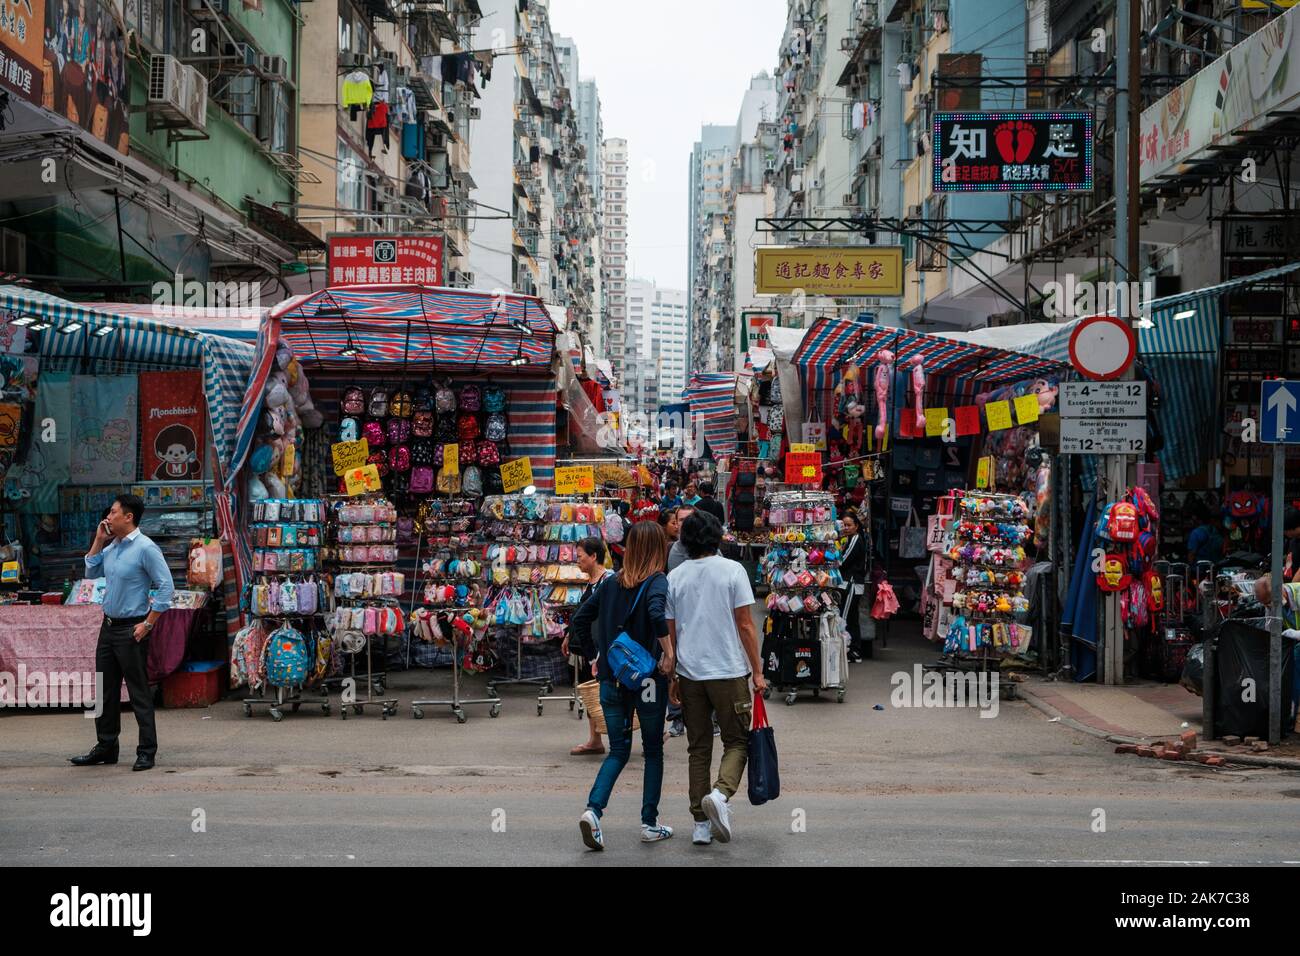 HongKong, China - November, 2019: die Menschen auf der Straße Ladie's Market (Markt) in Hongkong, Tung Choi Street, Mongkok Stockfoto